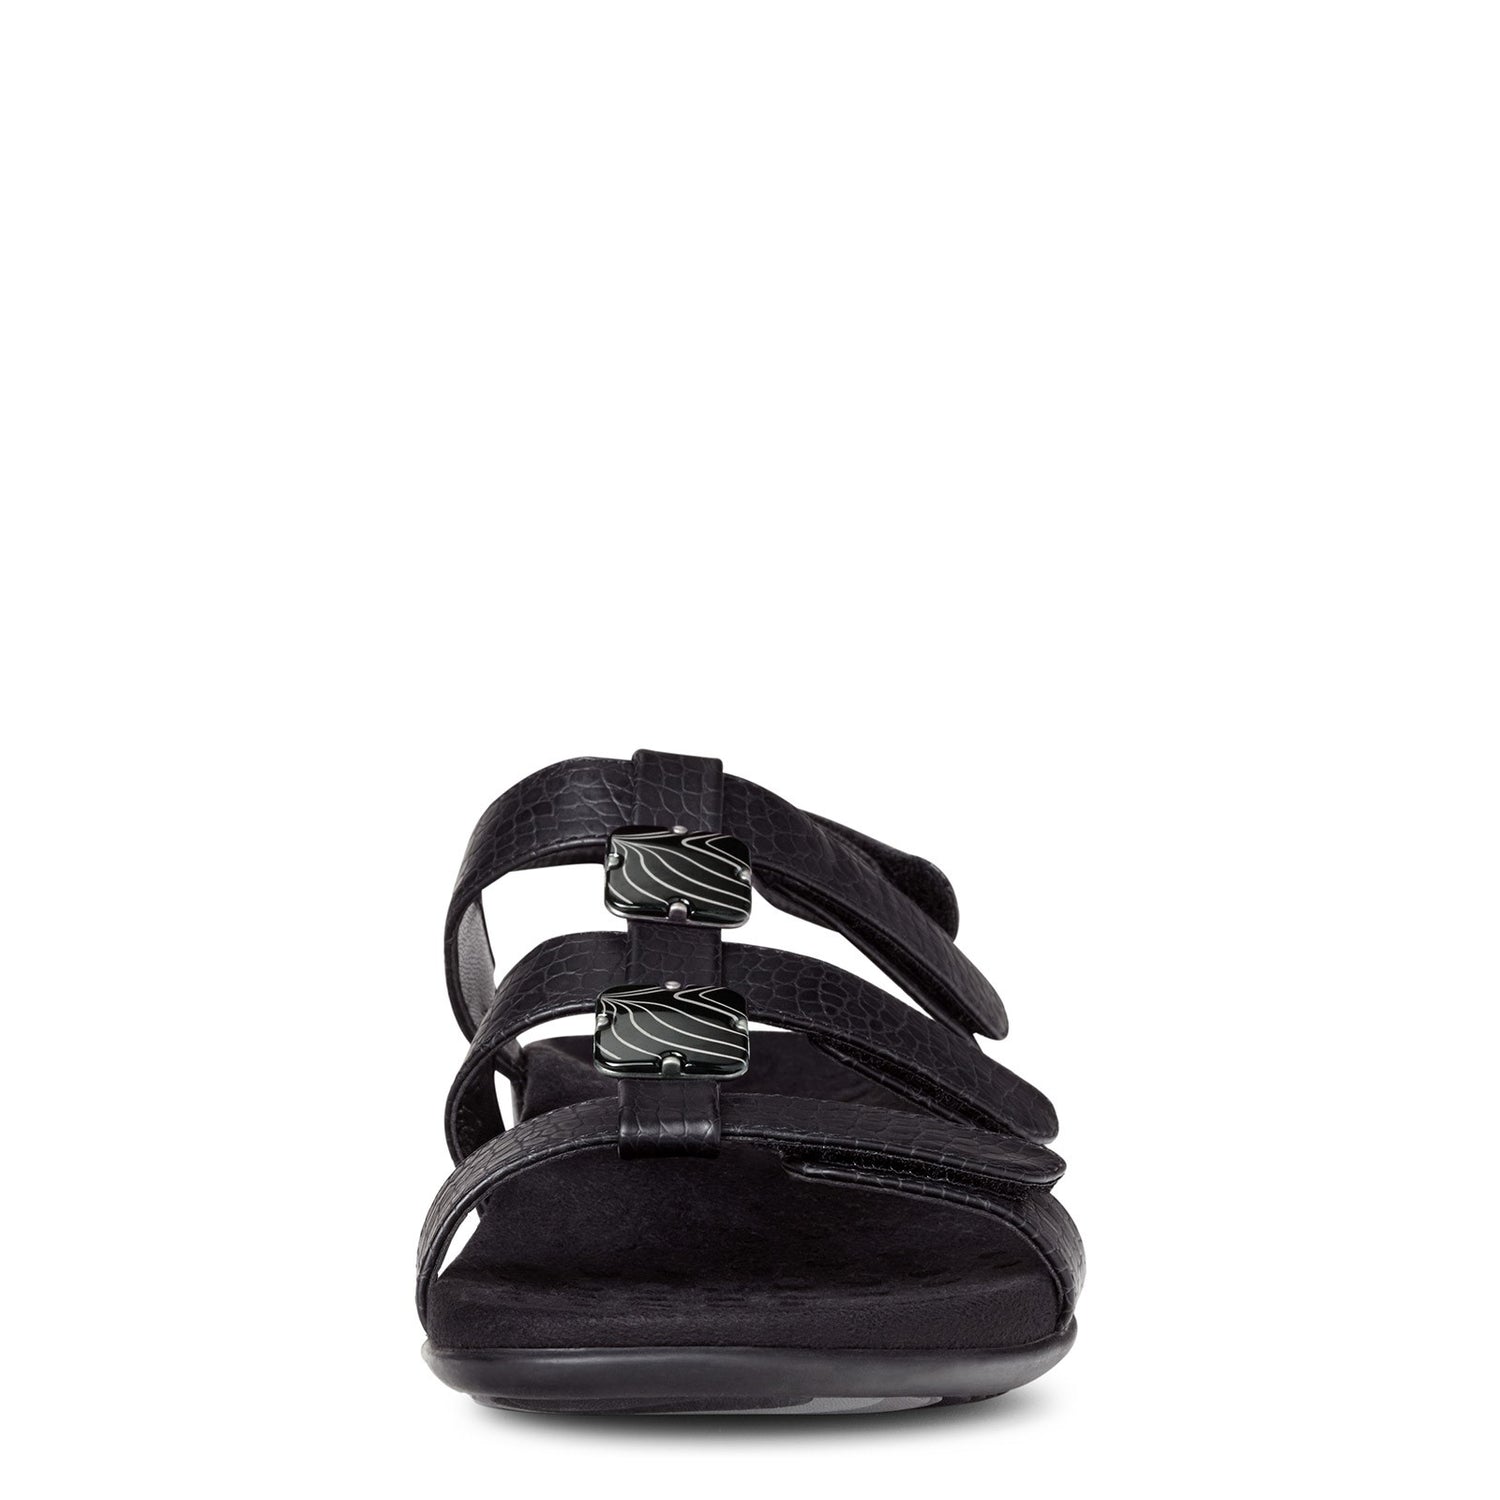 Peltz Shoes  Women's Vionic Amber Sandal BLACK CROCO 44AMBER-BLKCROC